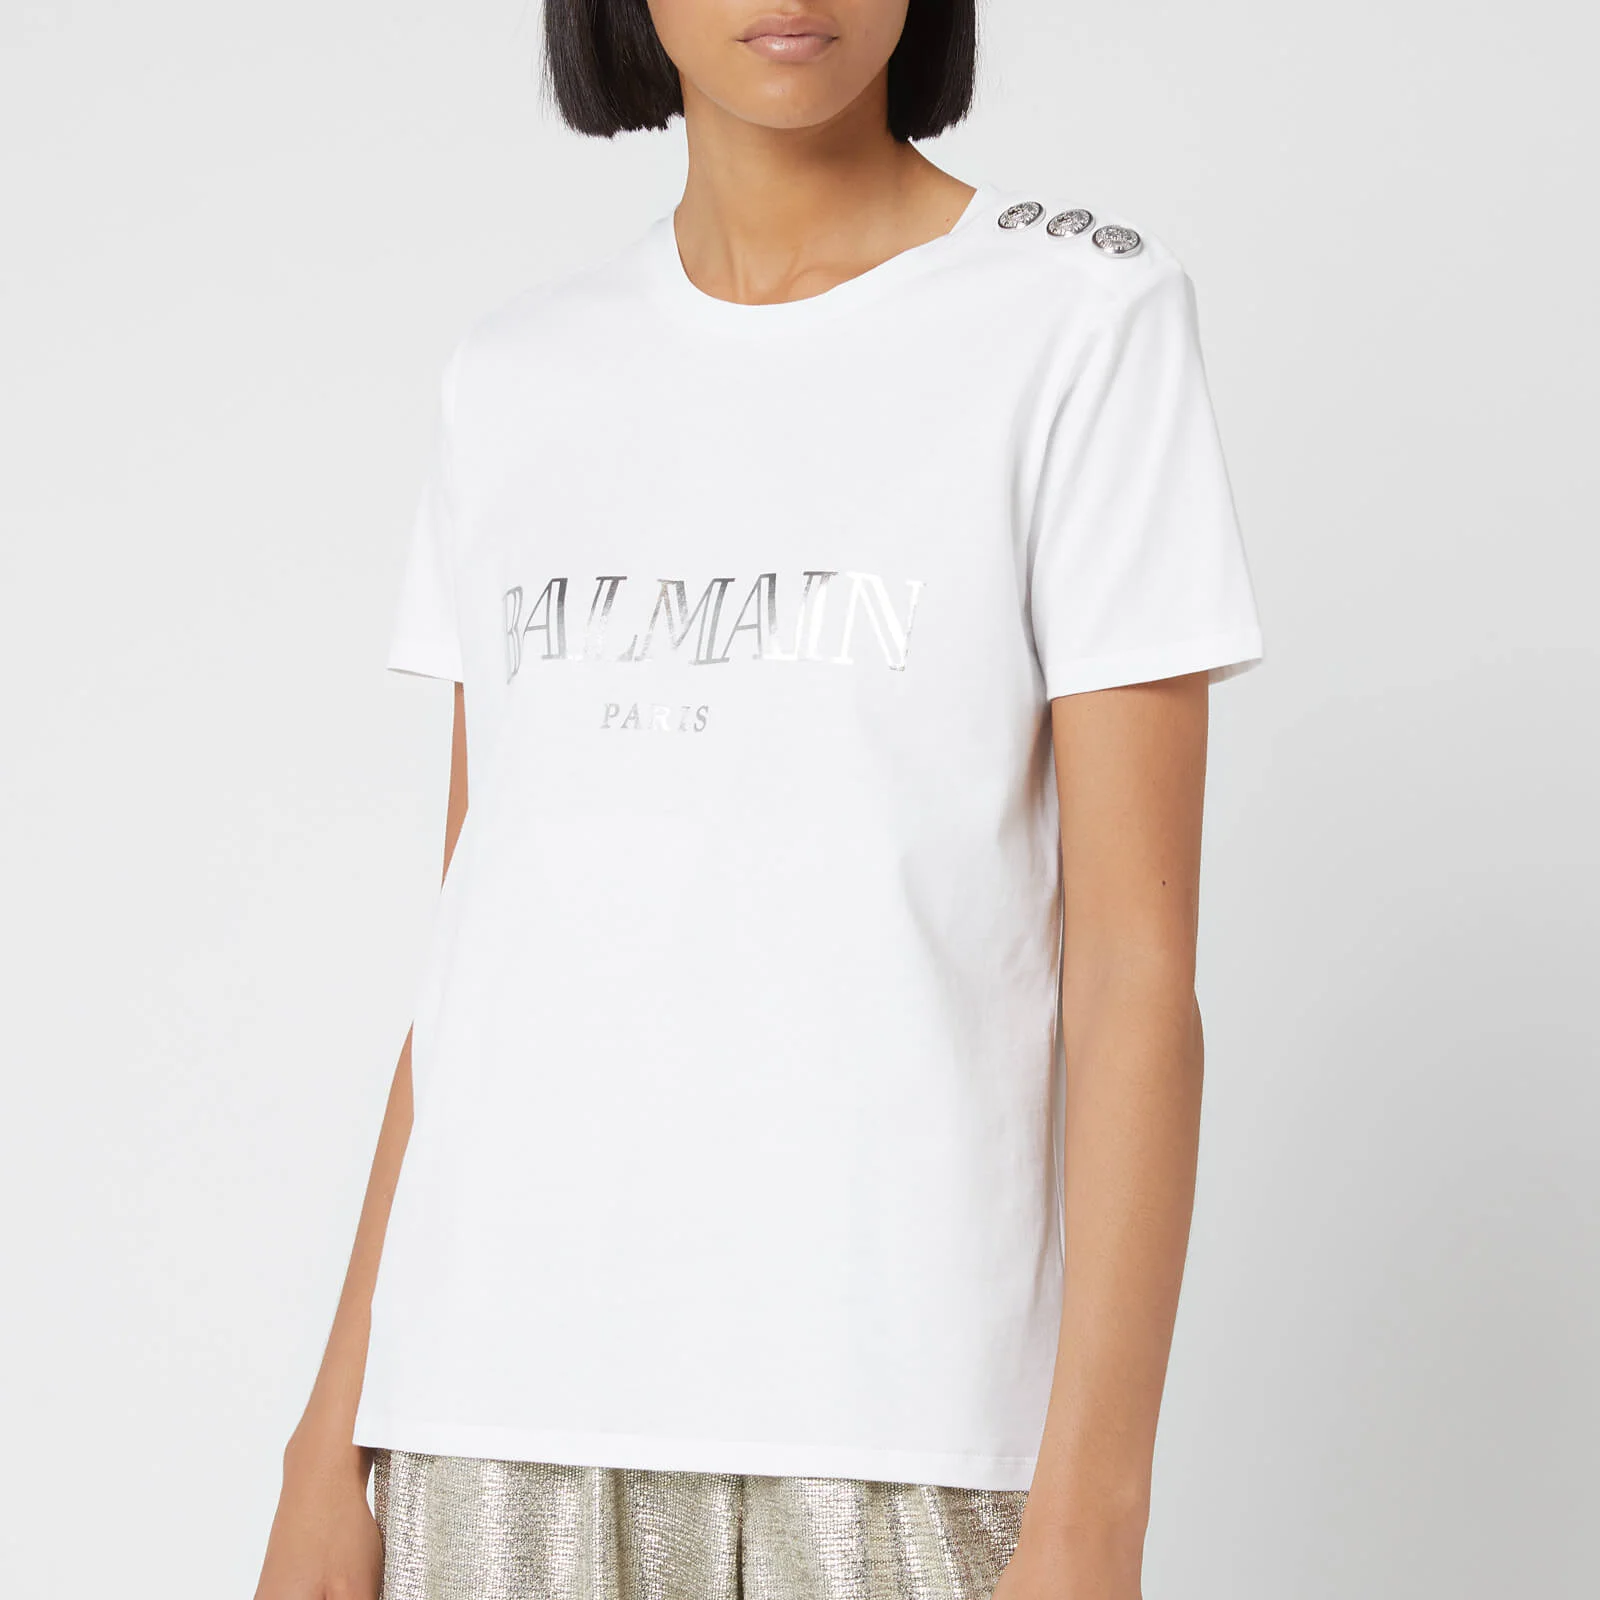 Balmain Women's Logo T-Shirt - White Image 1